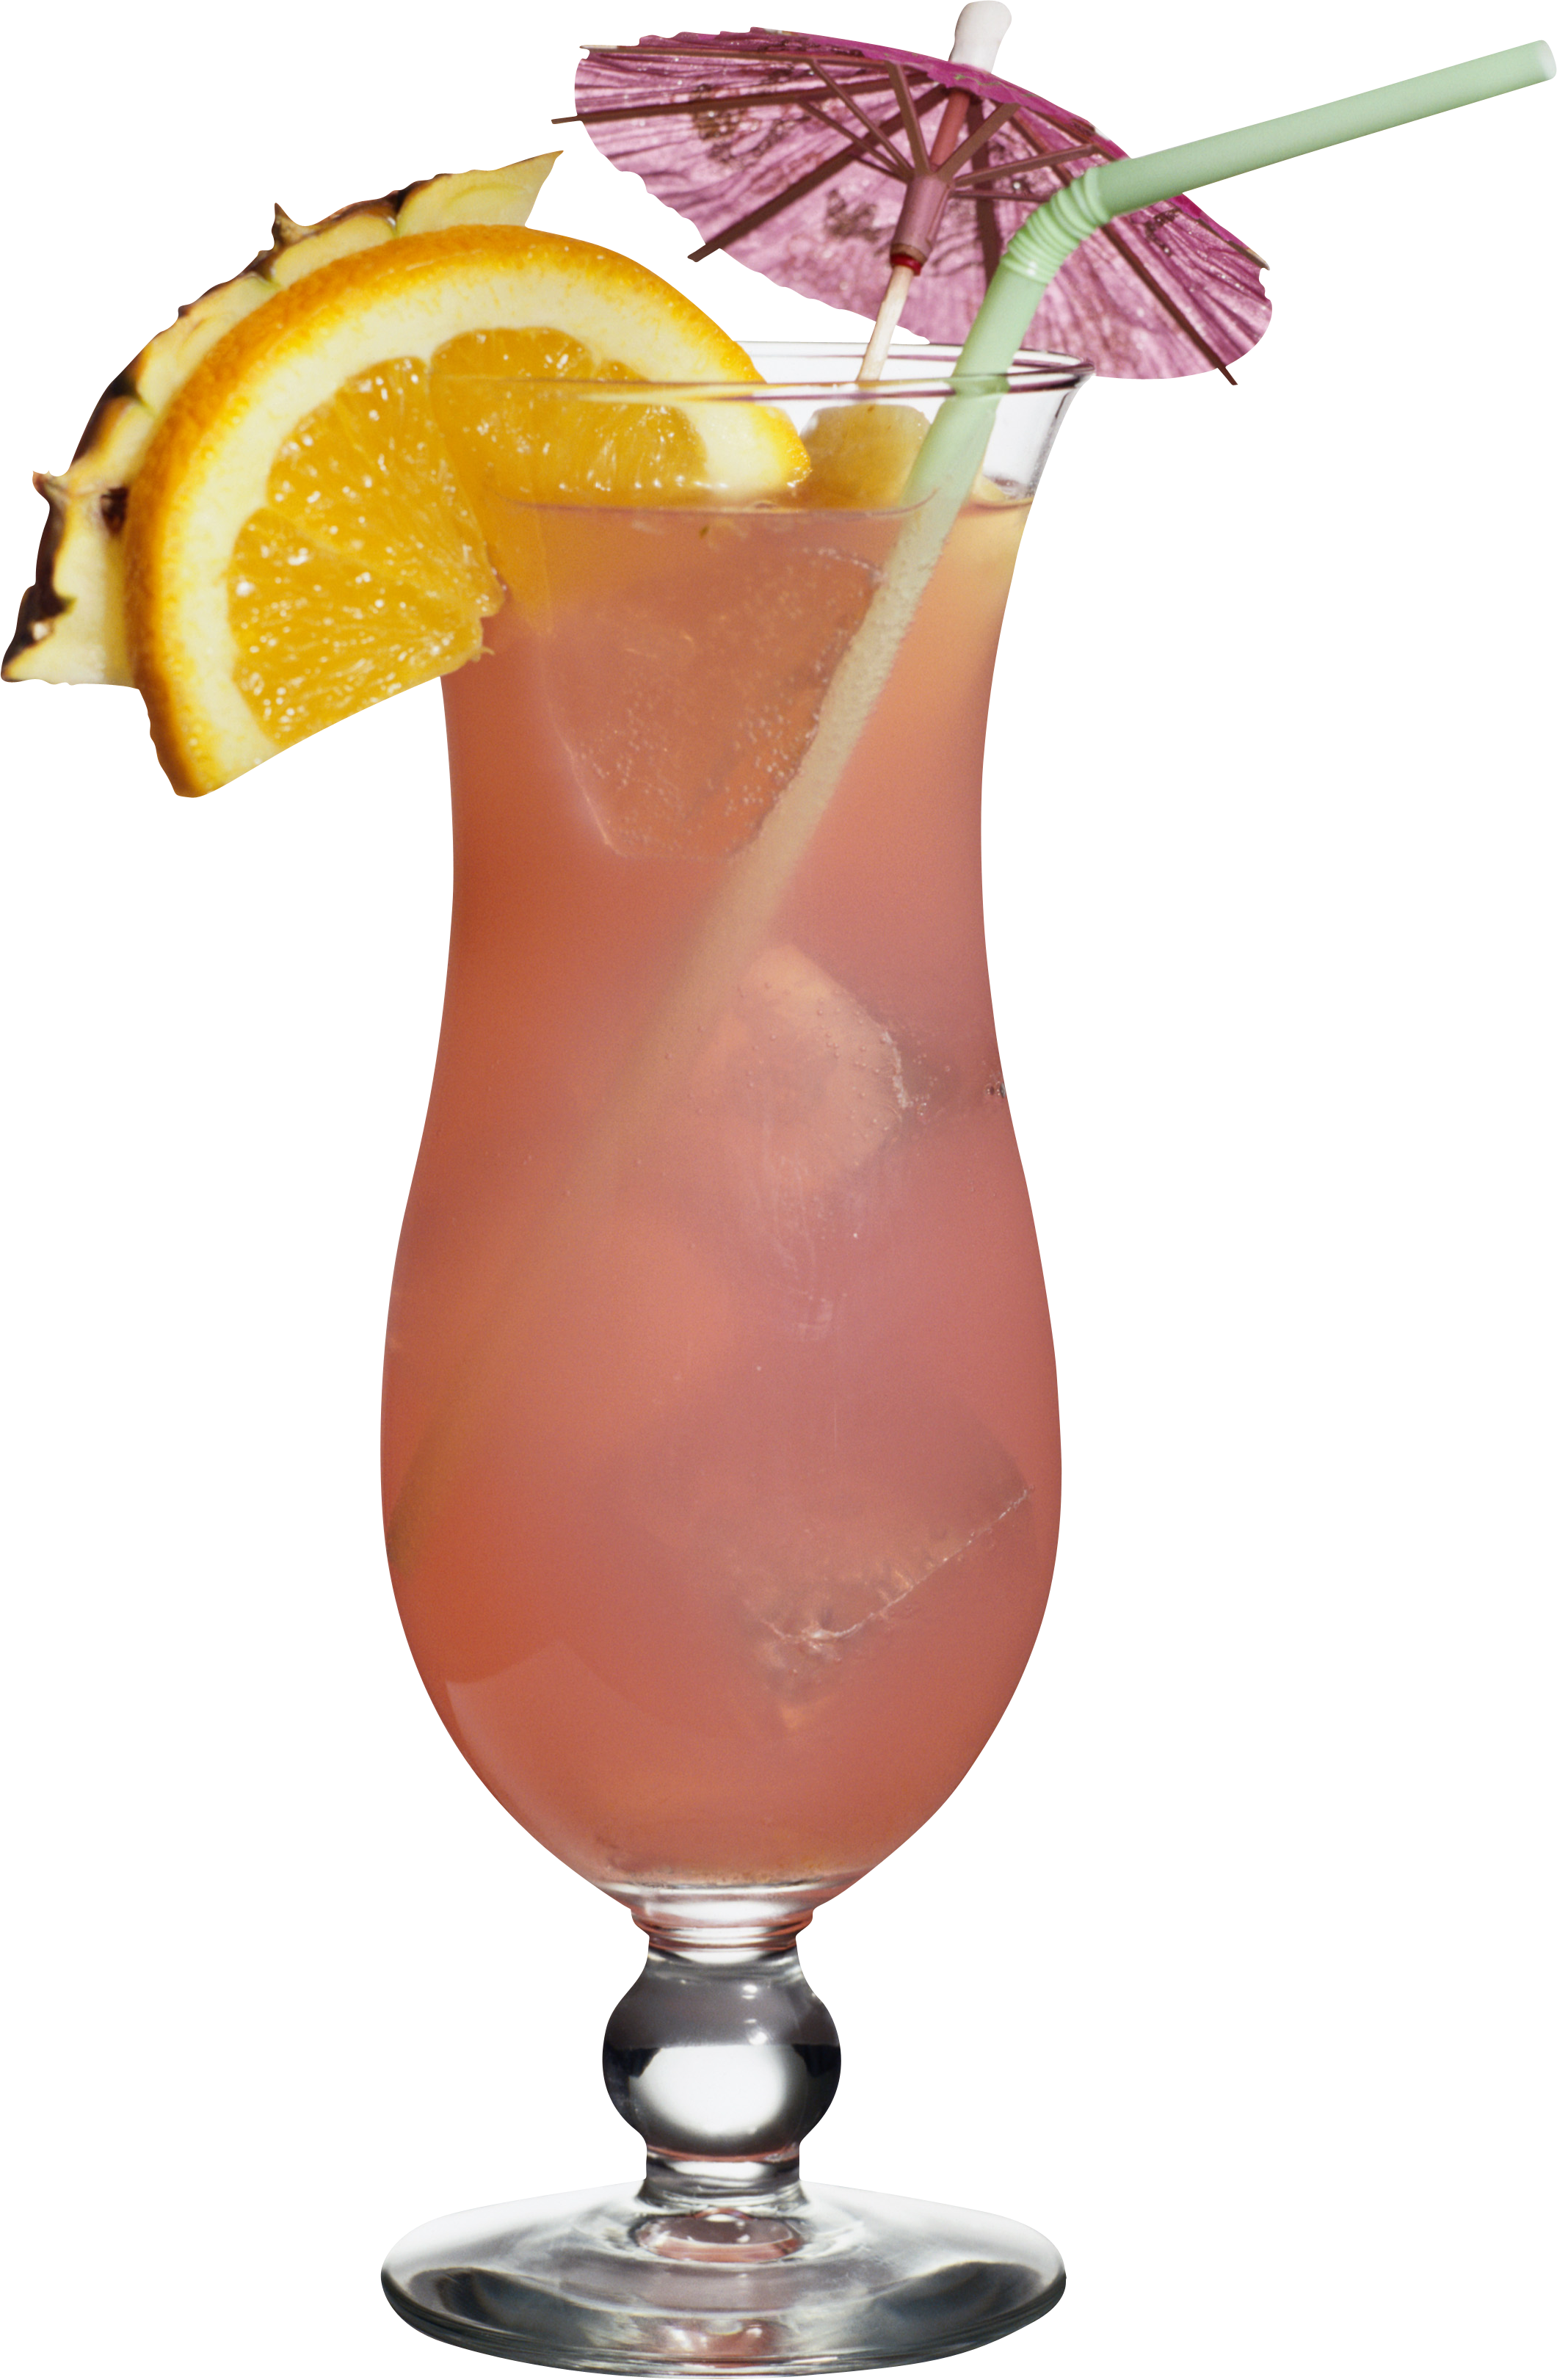 Raspberry Shrub Cocktail - What Should I Make For